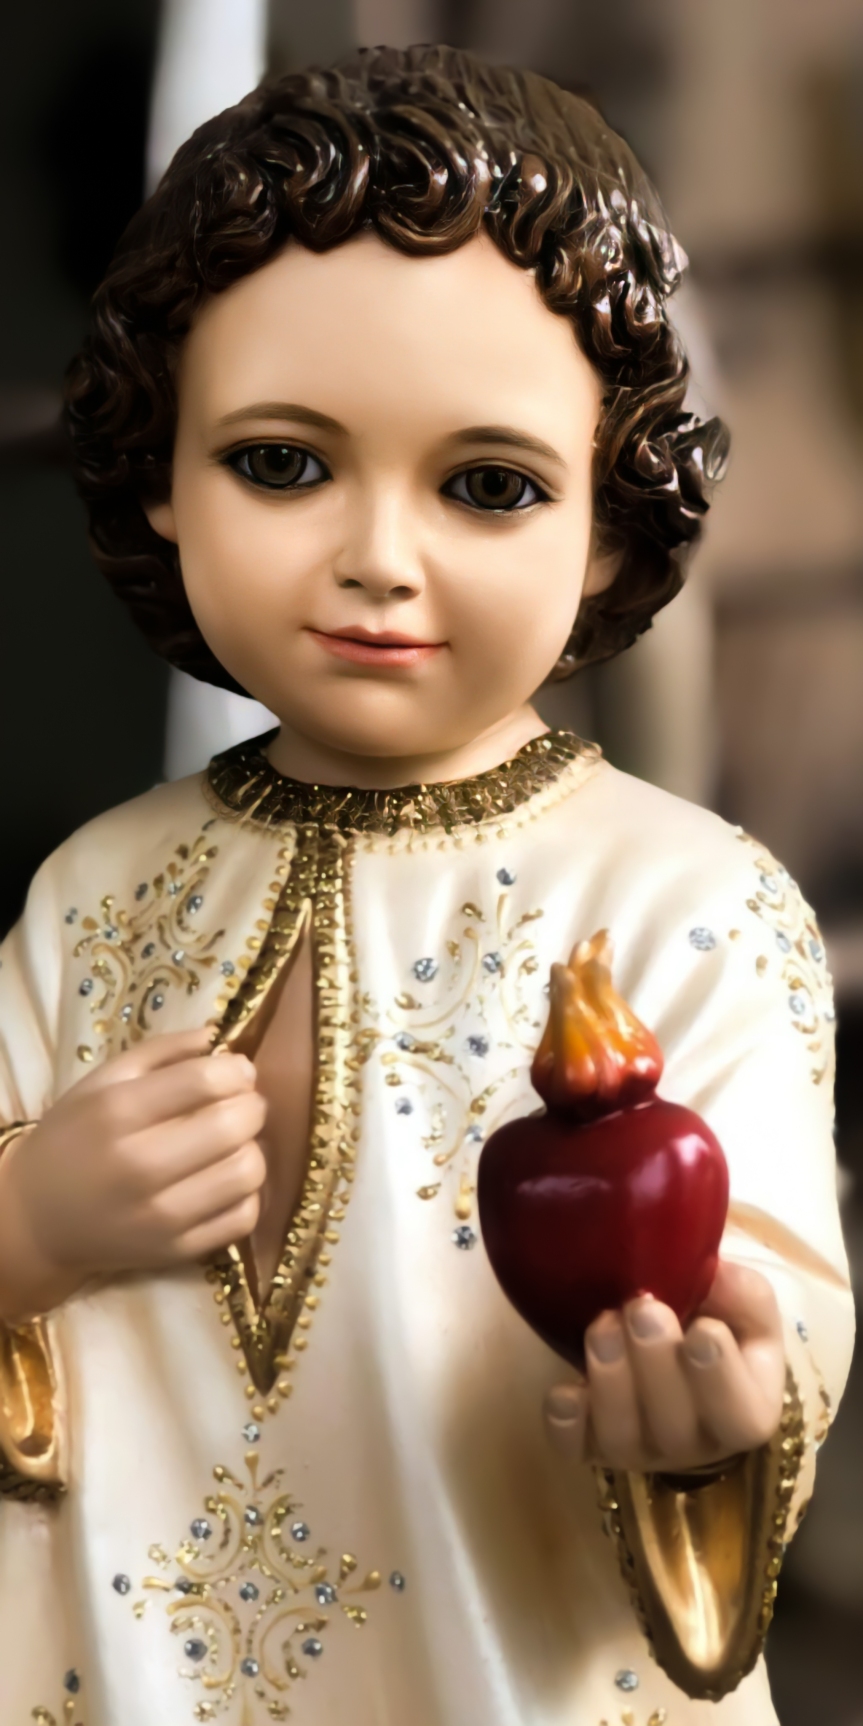 Infant Jesus Novena in Hindi | बालक येसु की नोवेना प्रार्थना